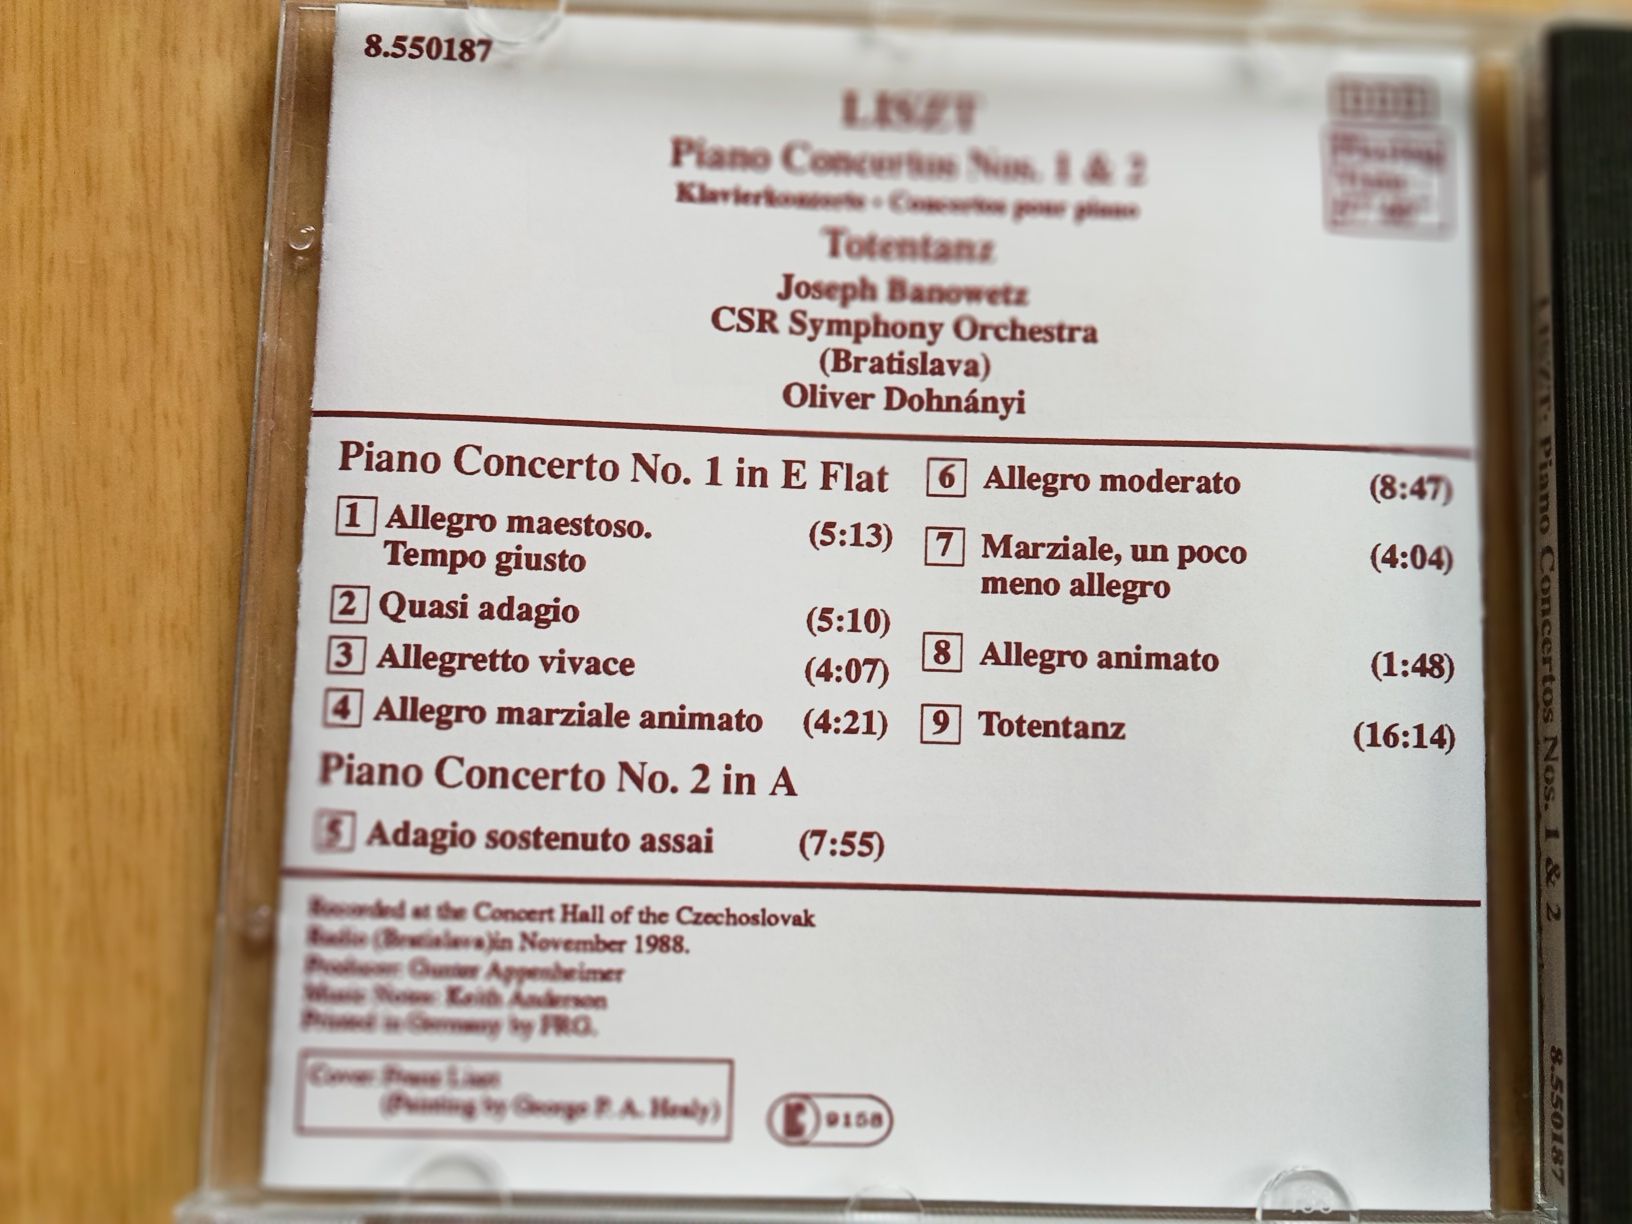 CD Audio диск List-Piano Concertos Nos.1 & 2